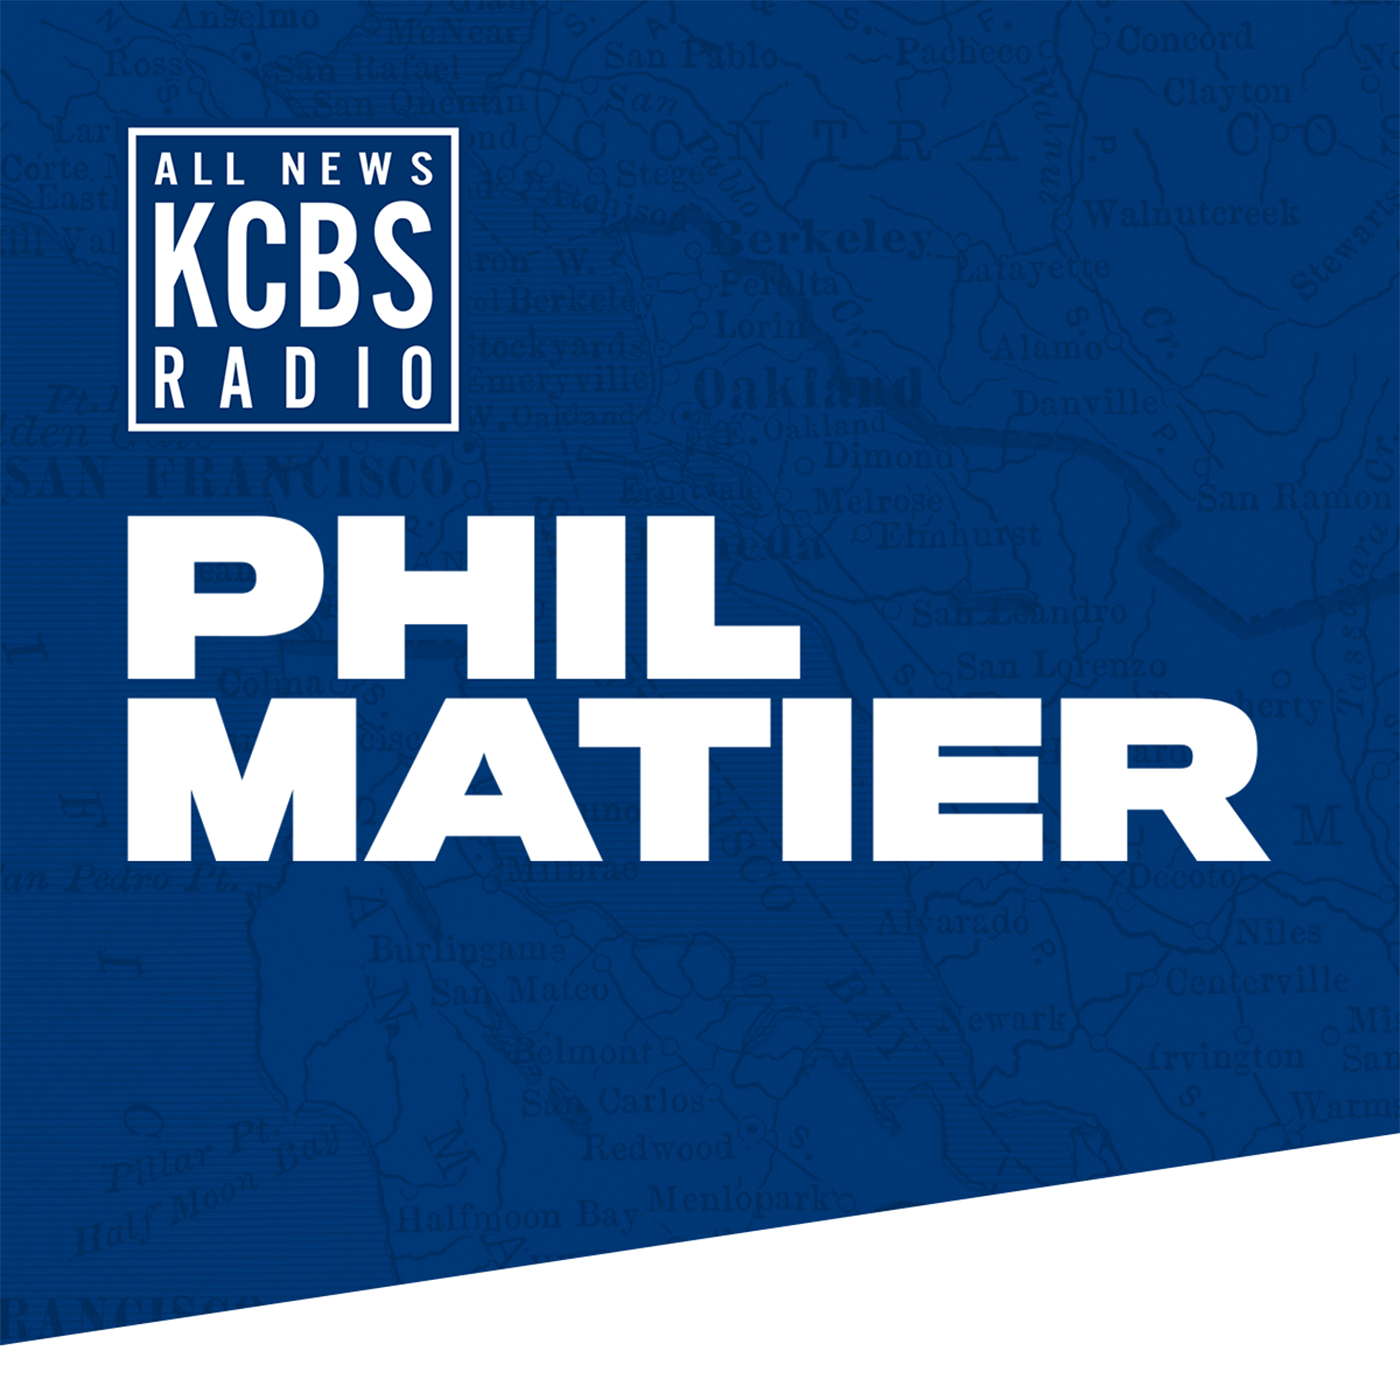 Phil Matier: Final Presidential debate recap